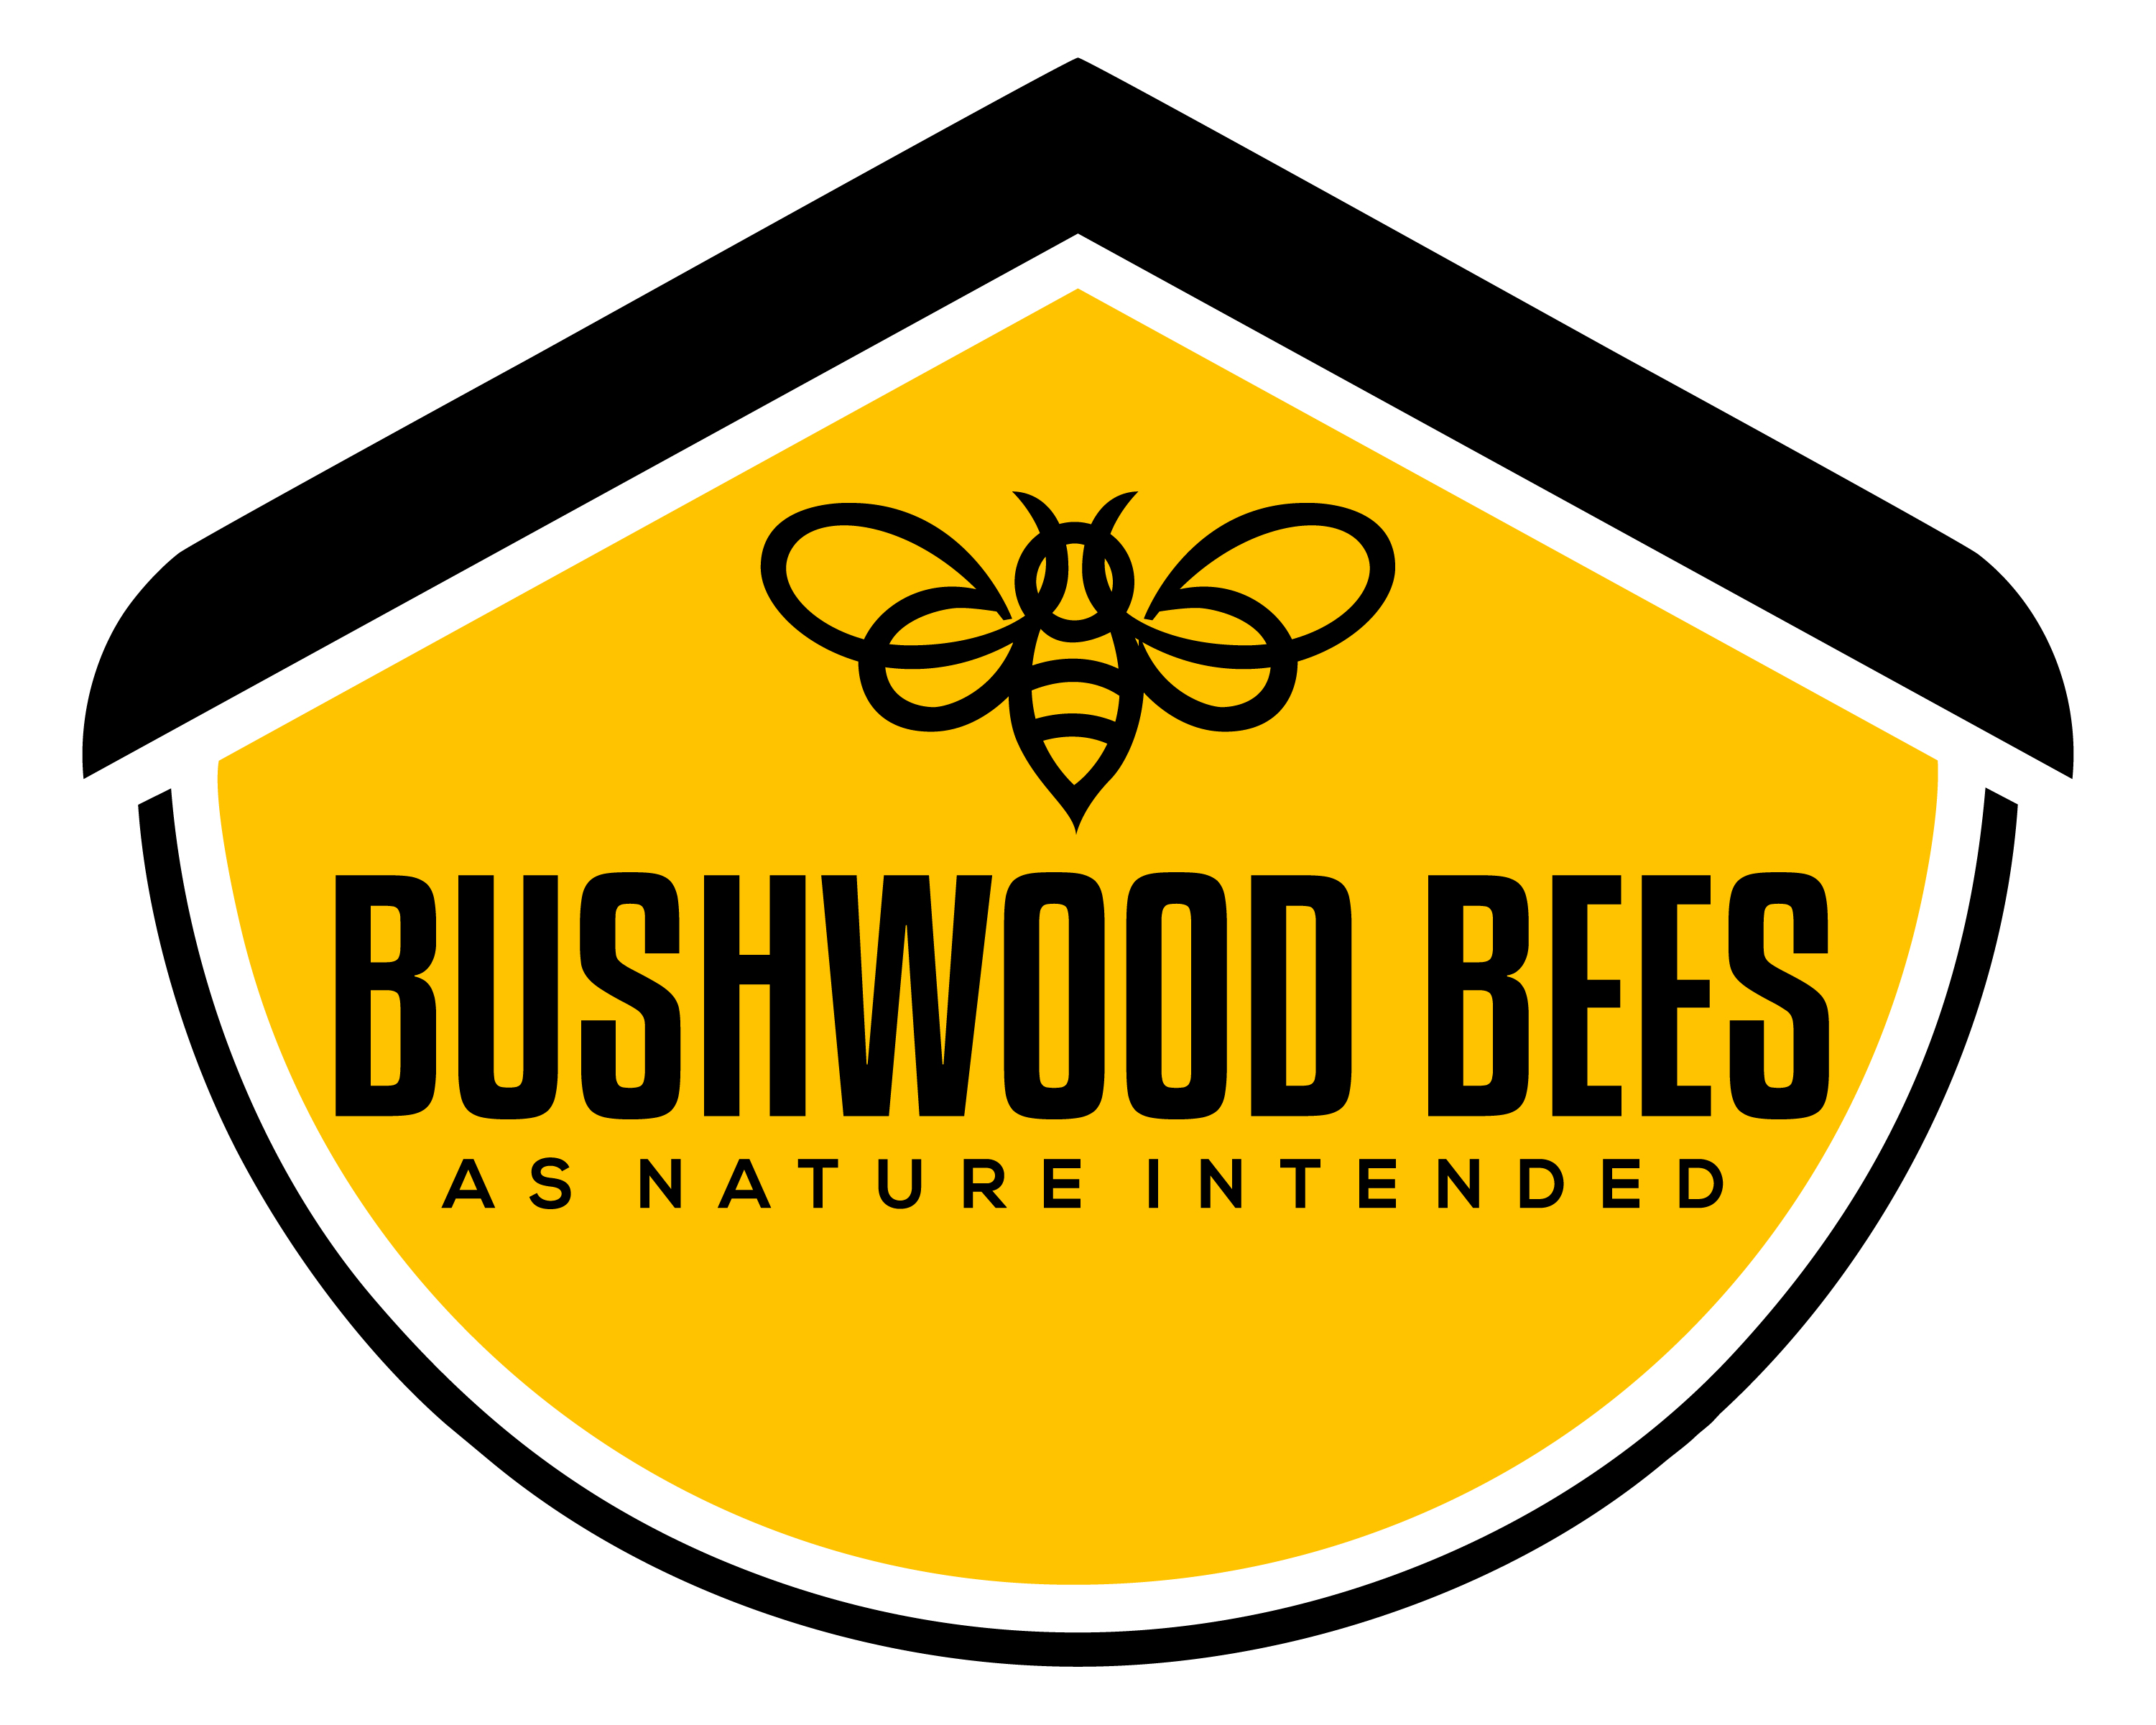 Bushwood Bees